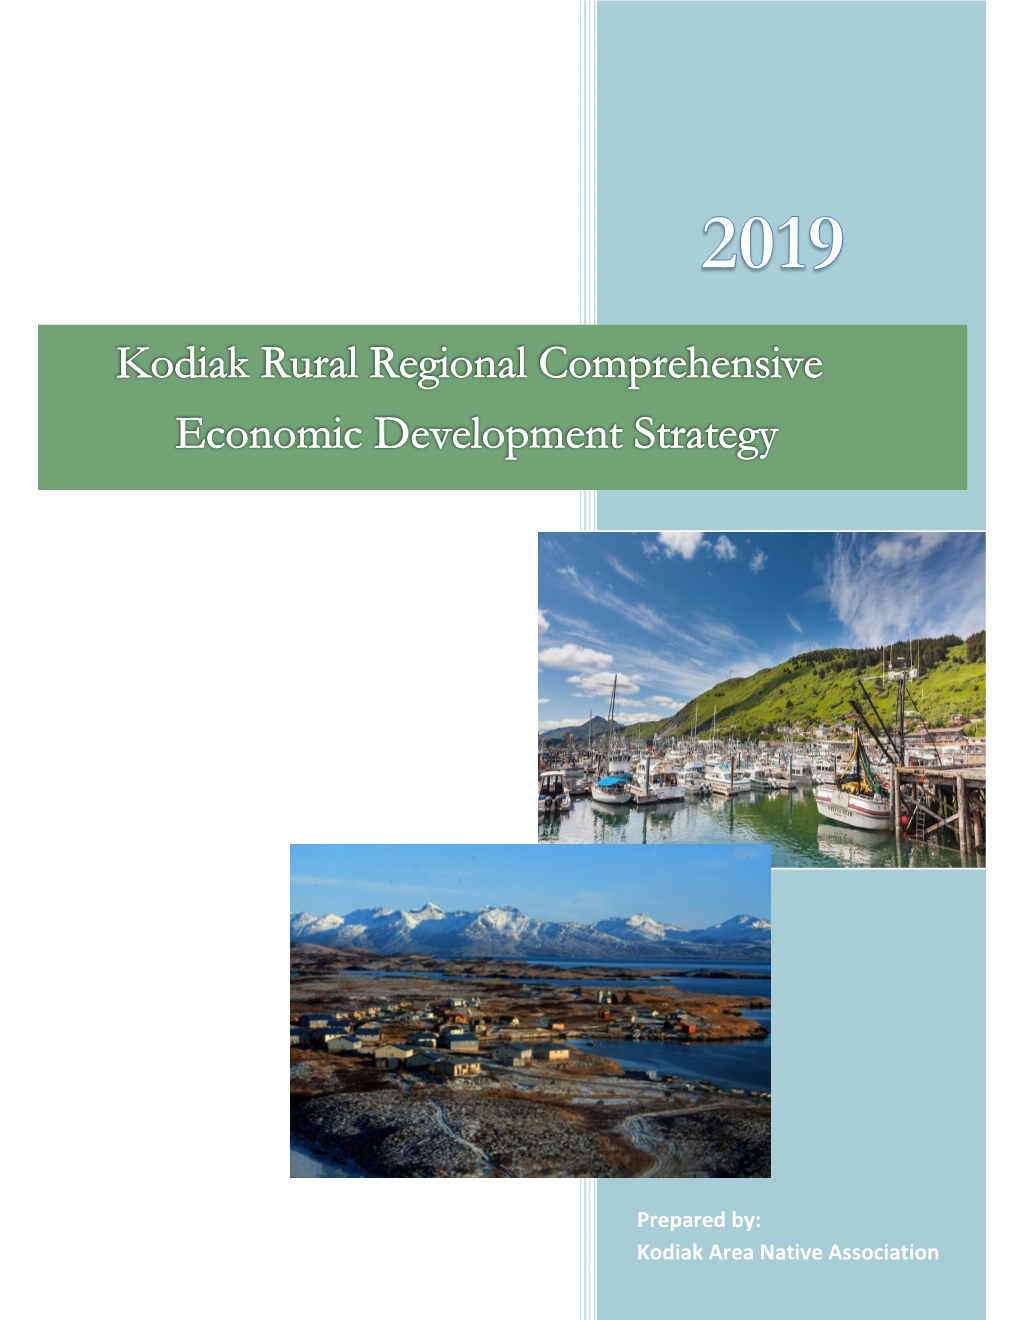 Prepared By: Kodiak Area Native Association Kodiak Area Native Association – DRAFT Kodiak Rural Comprehensive Economic Development Strategy – April 2019